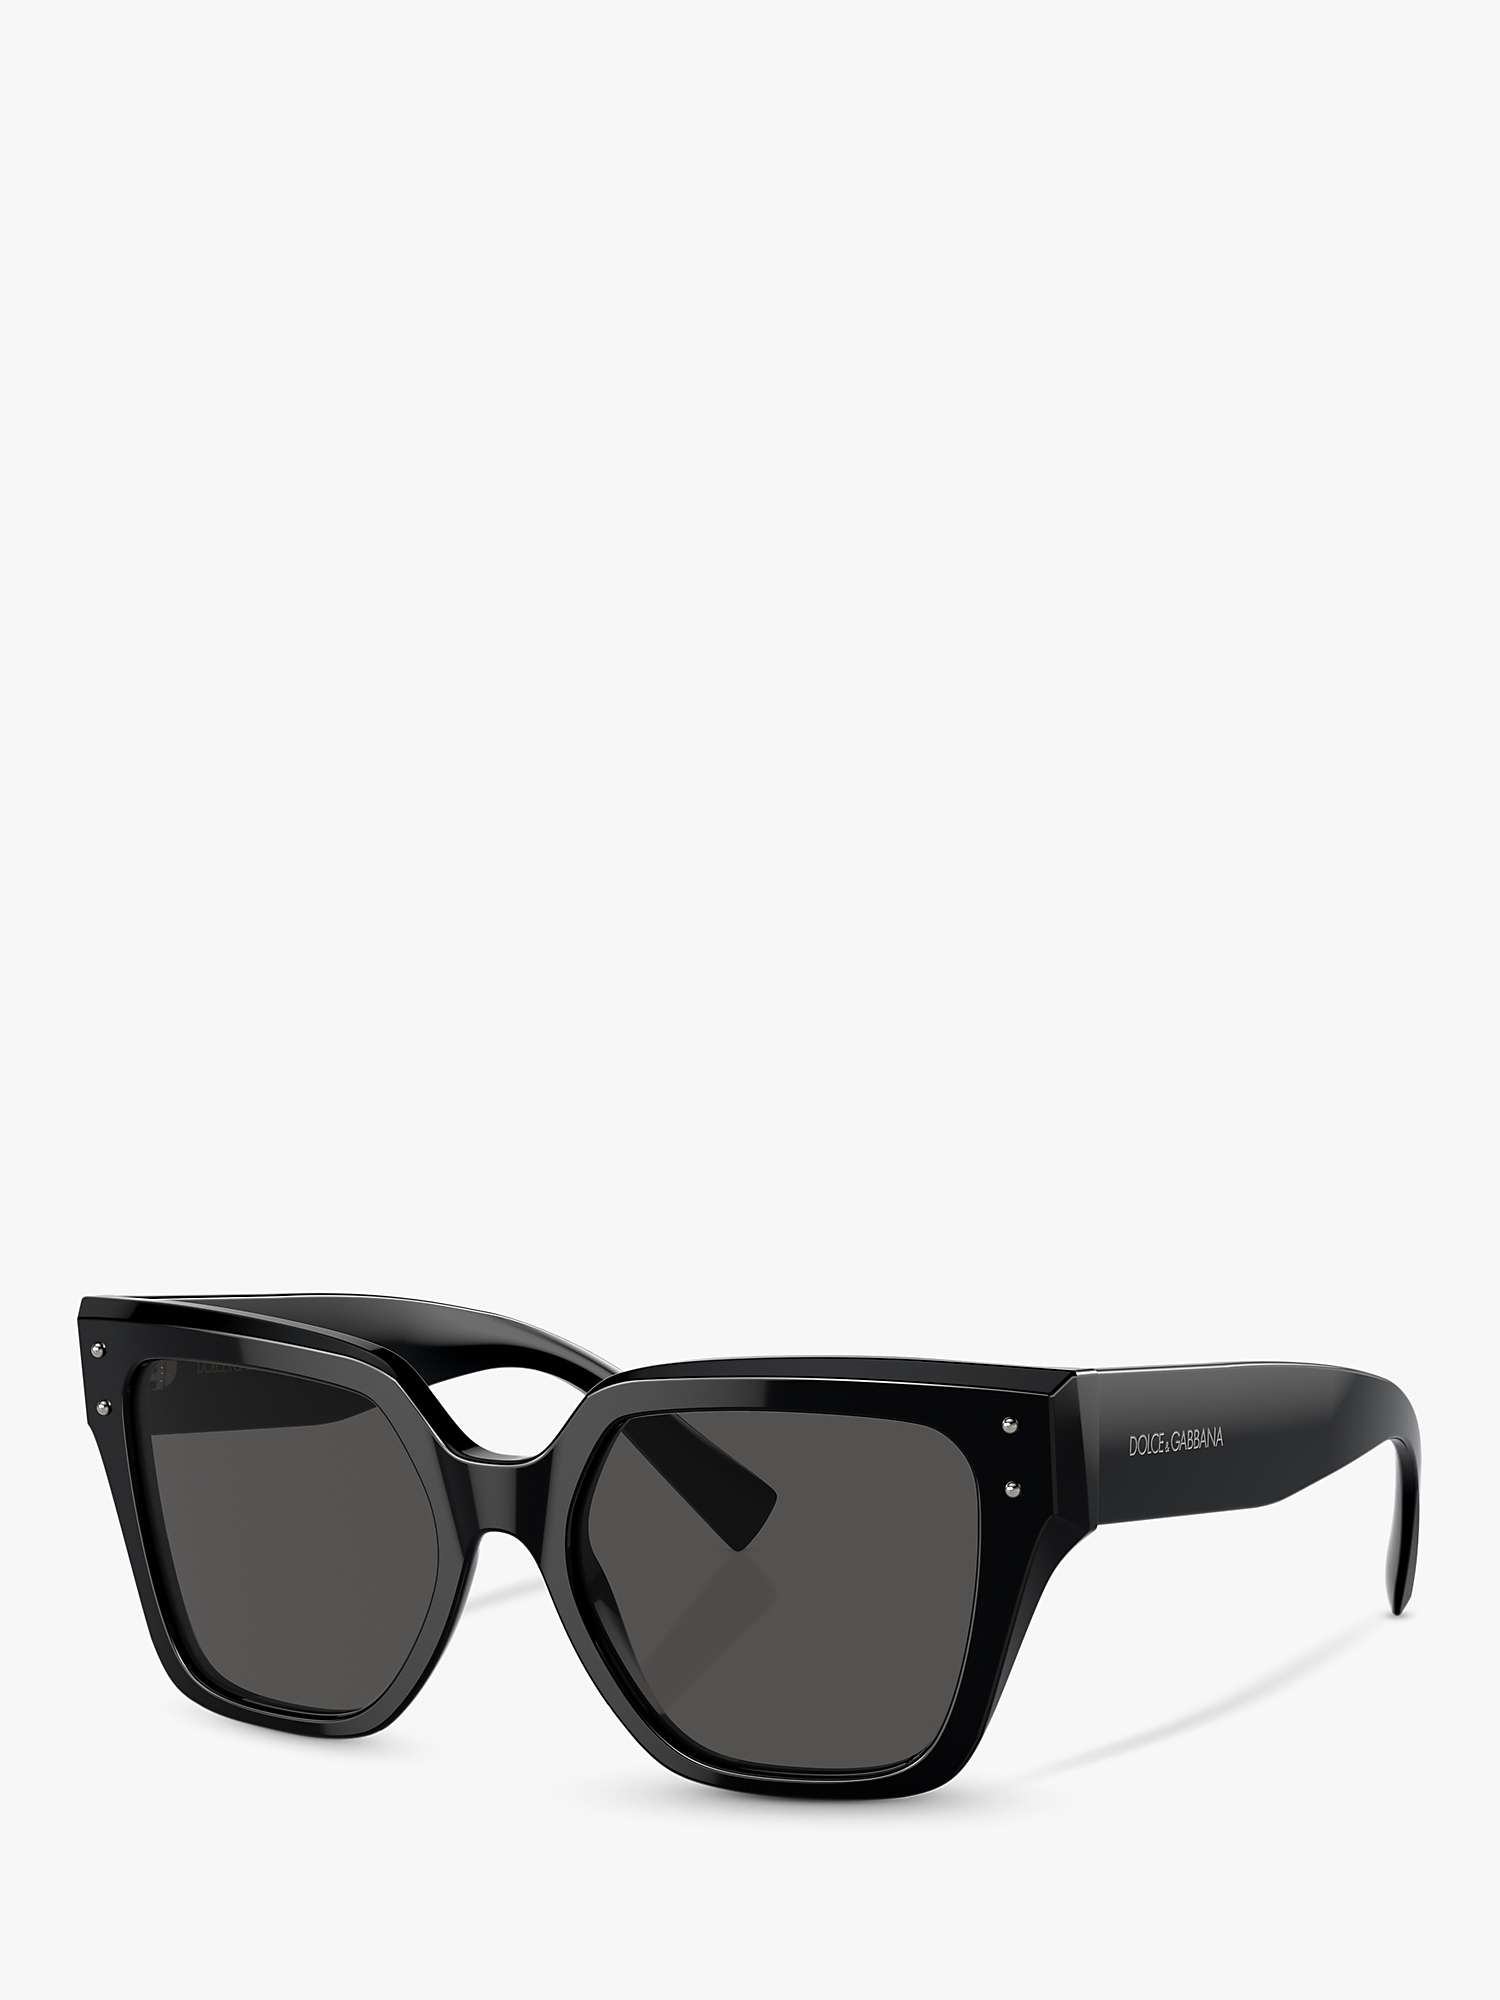 Buy Dolce & Gabbana DG4471 Women's Rectangular Sunglasses, Black Online at johnlewis.com